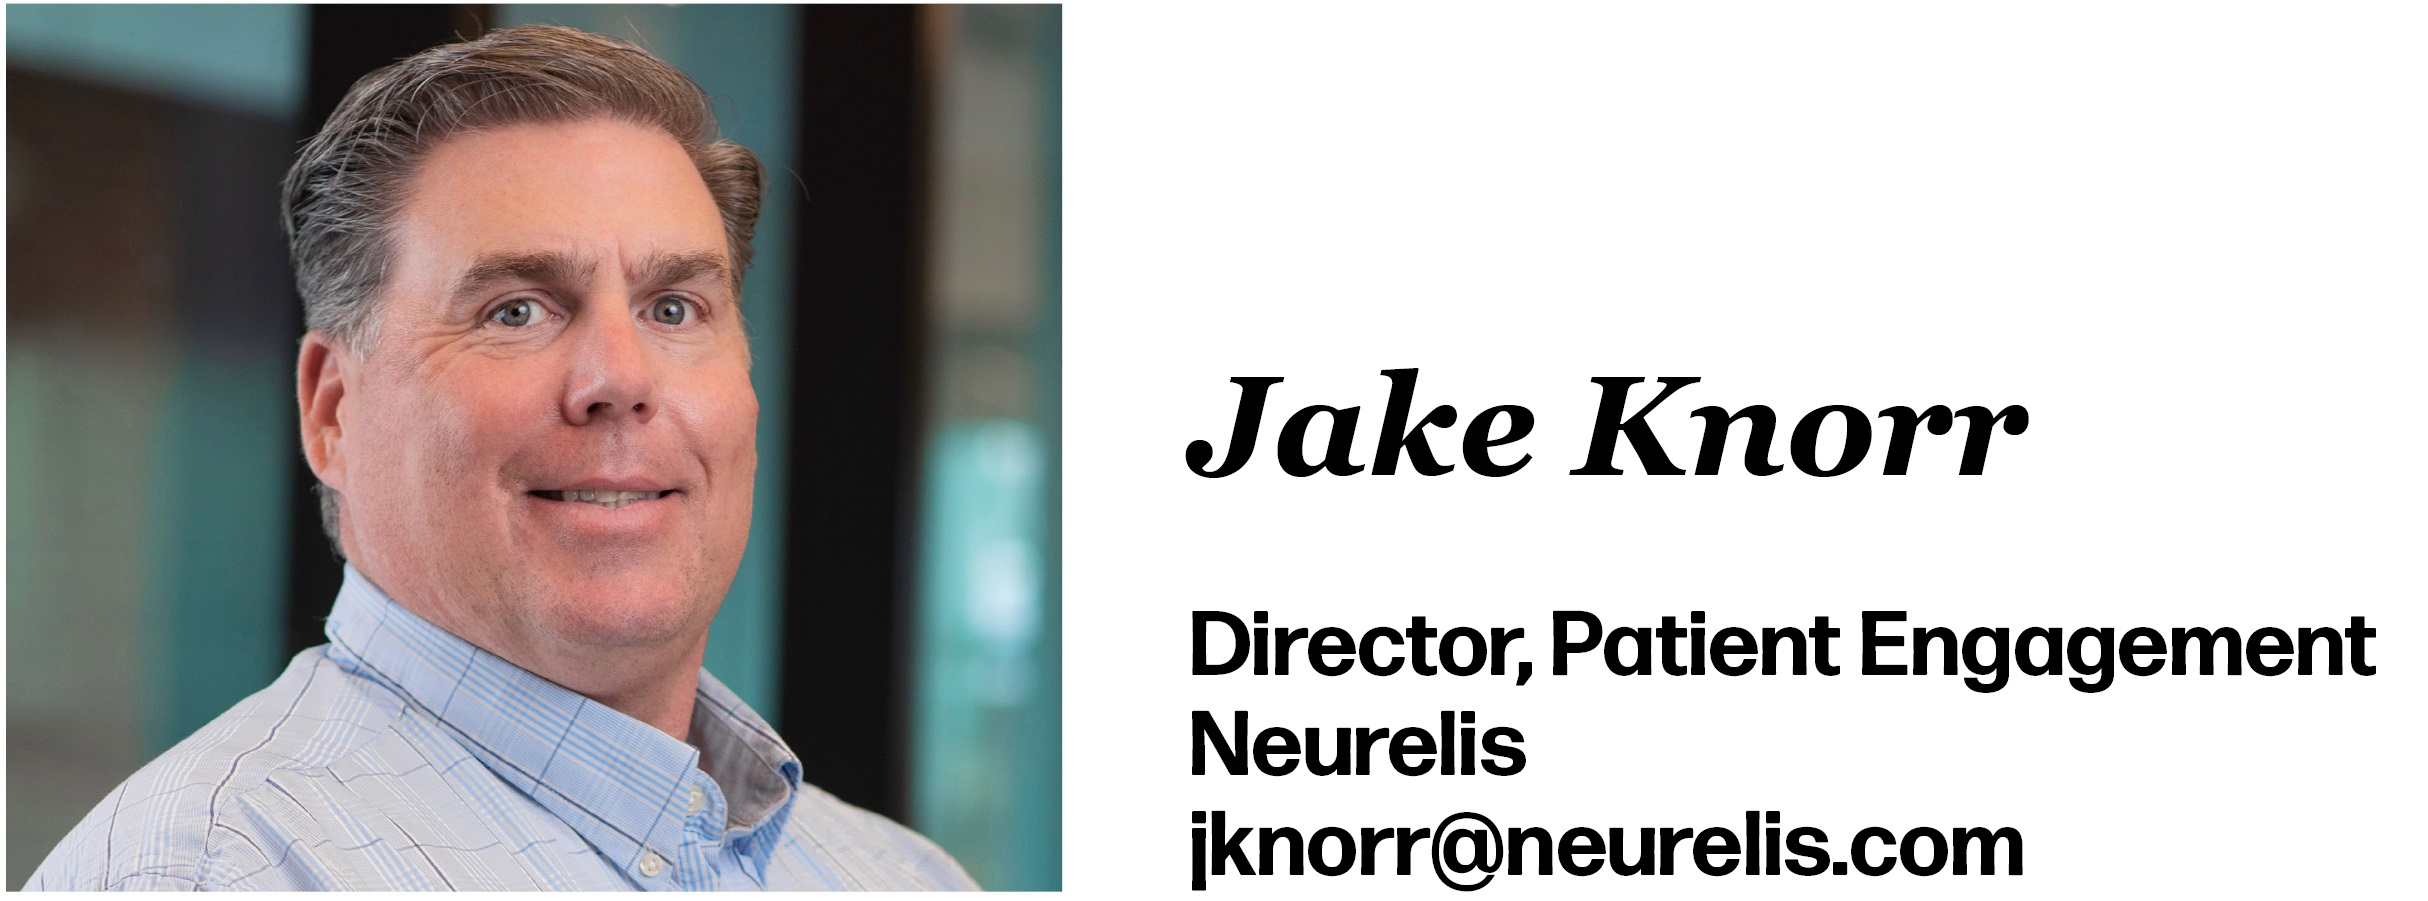 Jake Knorr is Director, Patient Engagement at Neurelis. His email is jknorr@neurelis.com.